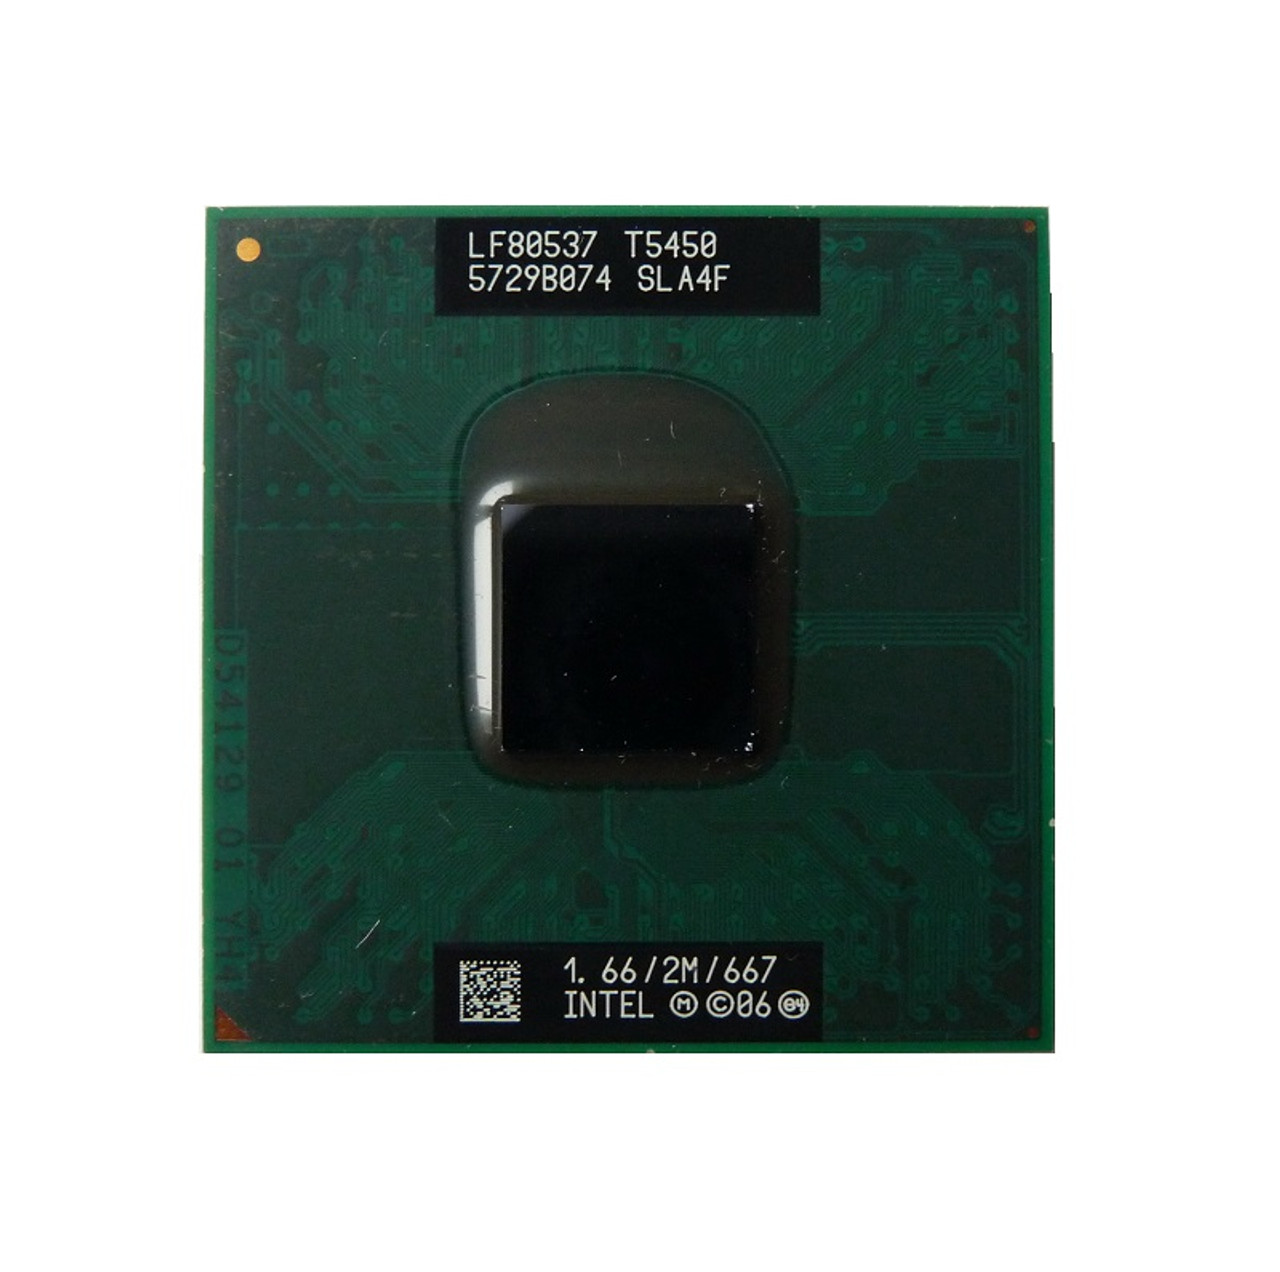 LF80537GF0282MT - Intel Core 2 Duo T5450 1.66GHz 667MHz FSB 2MB L2 Cache Socket PGA478 Mobile Processor